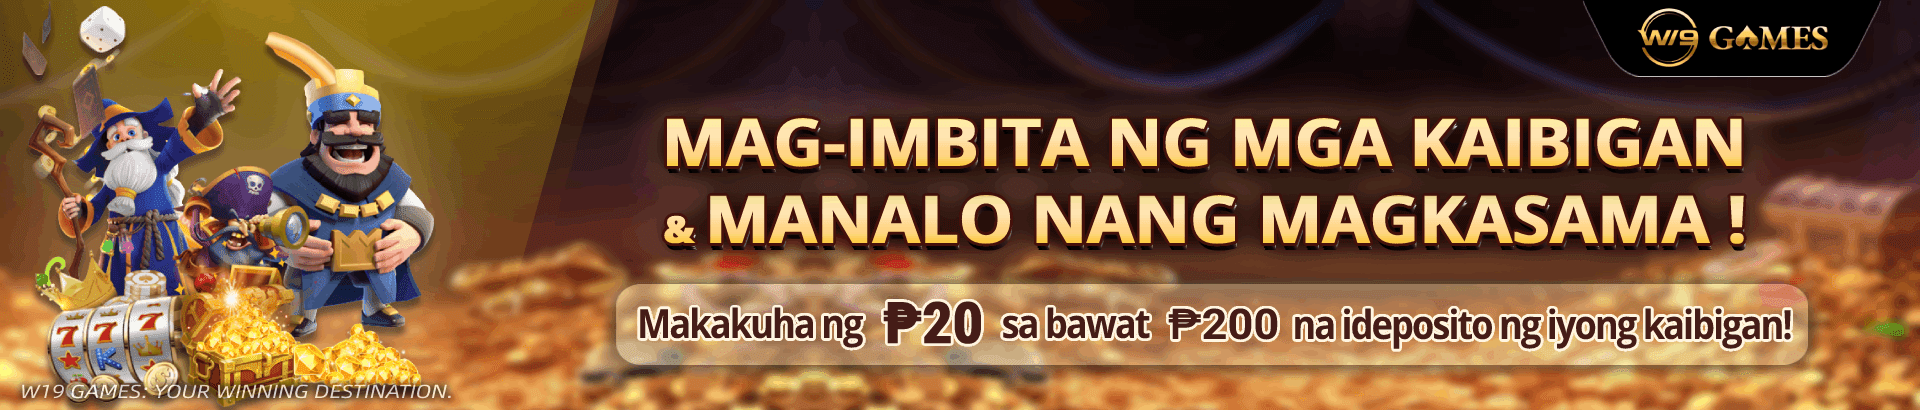 W19 Games - Mag-imbita ng Kaibigan